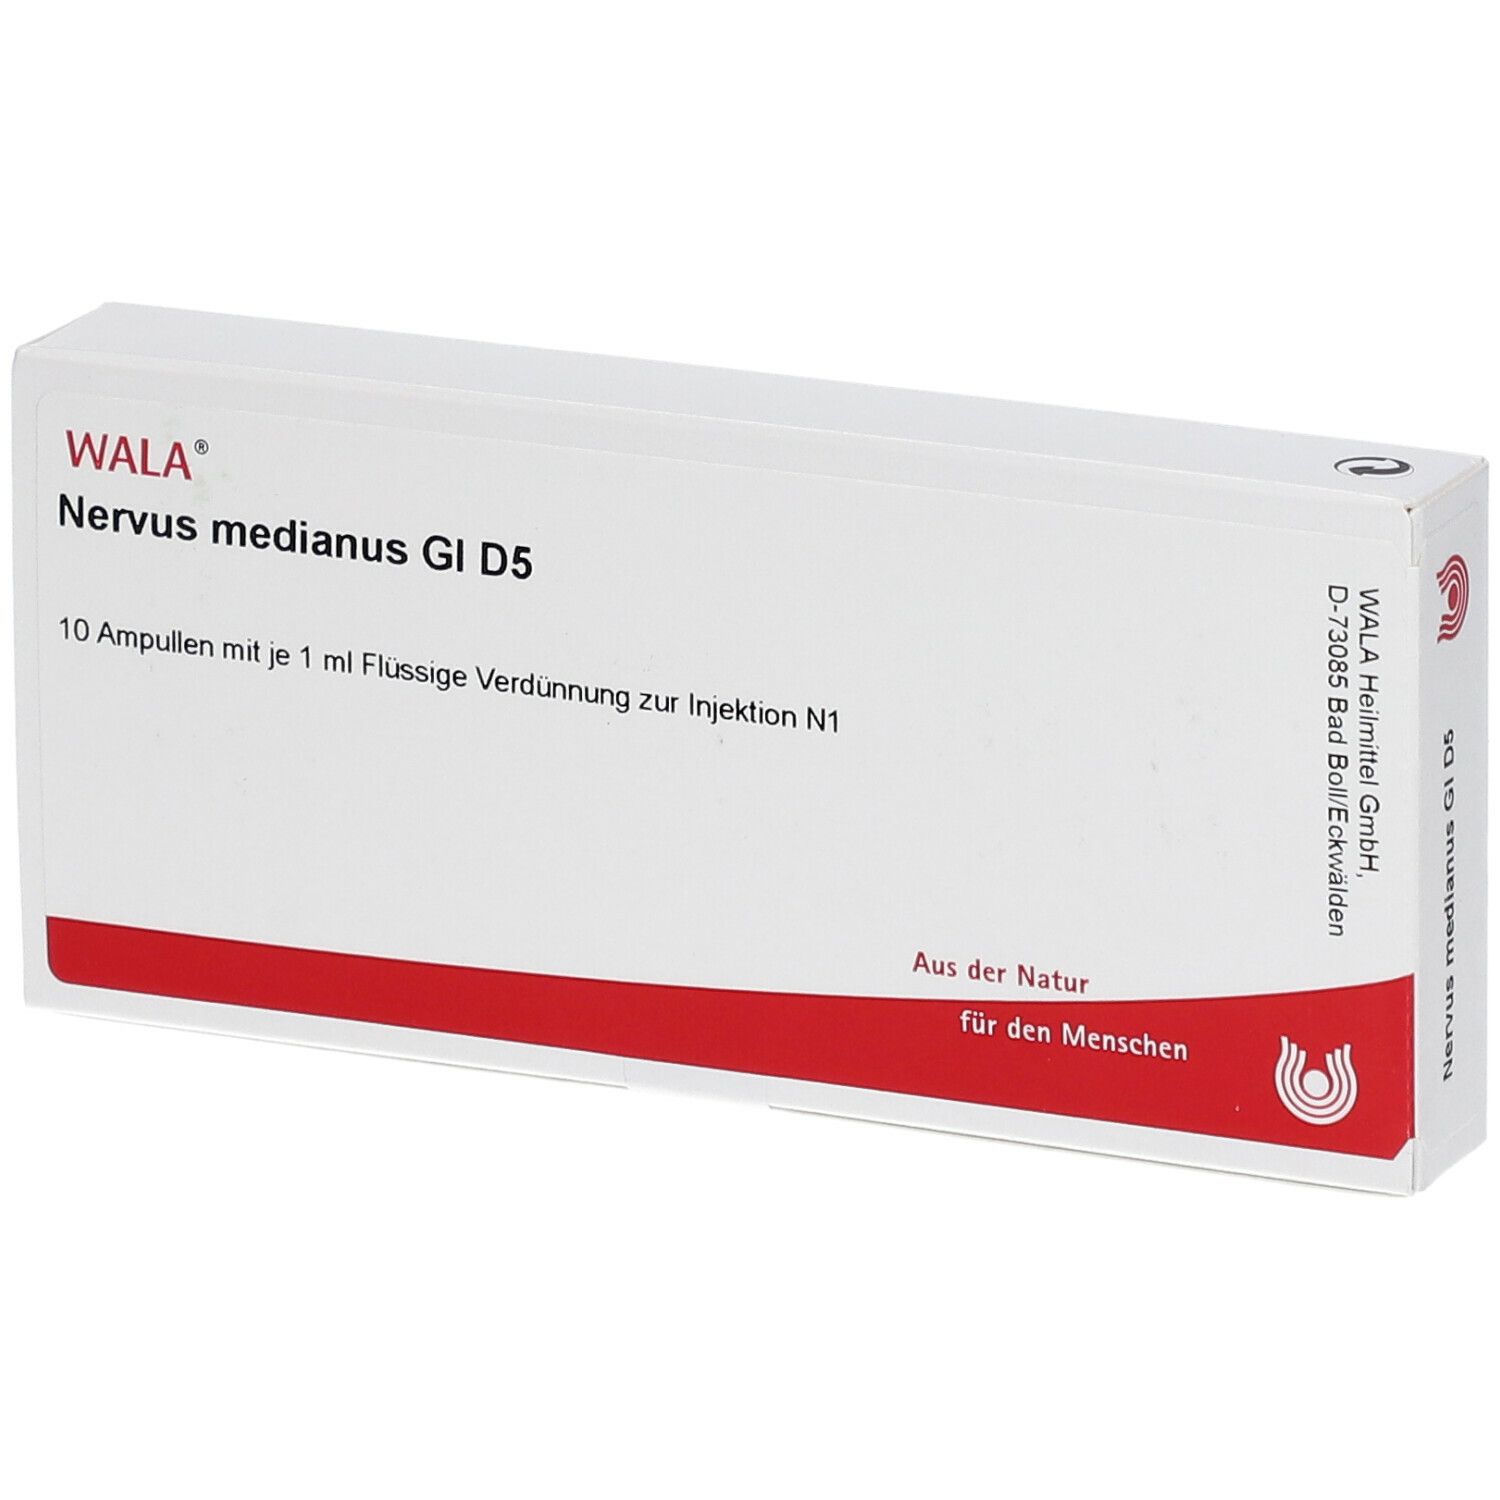 WALA® Nervus medianus Gl D 5